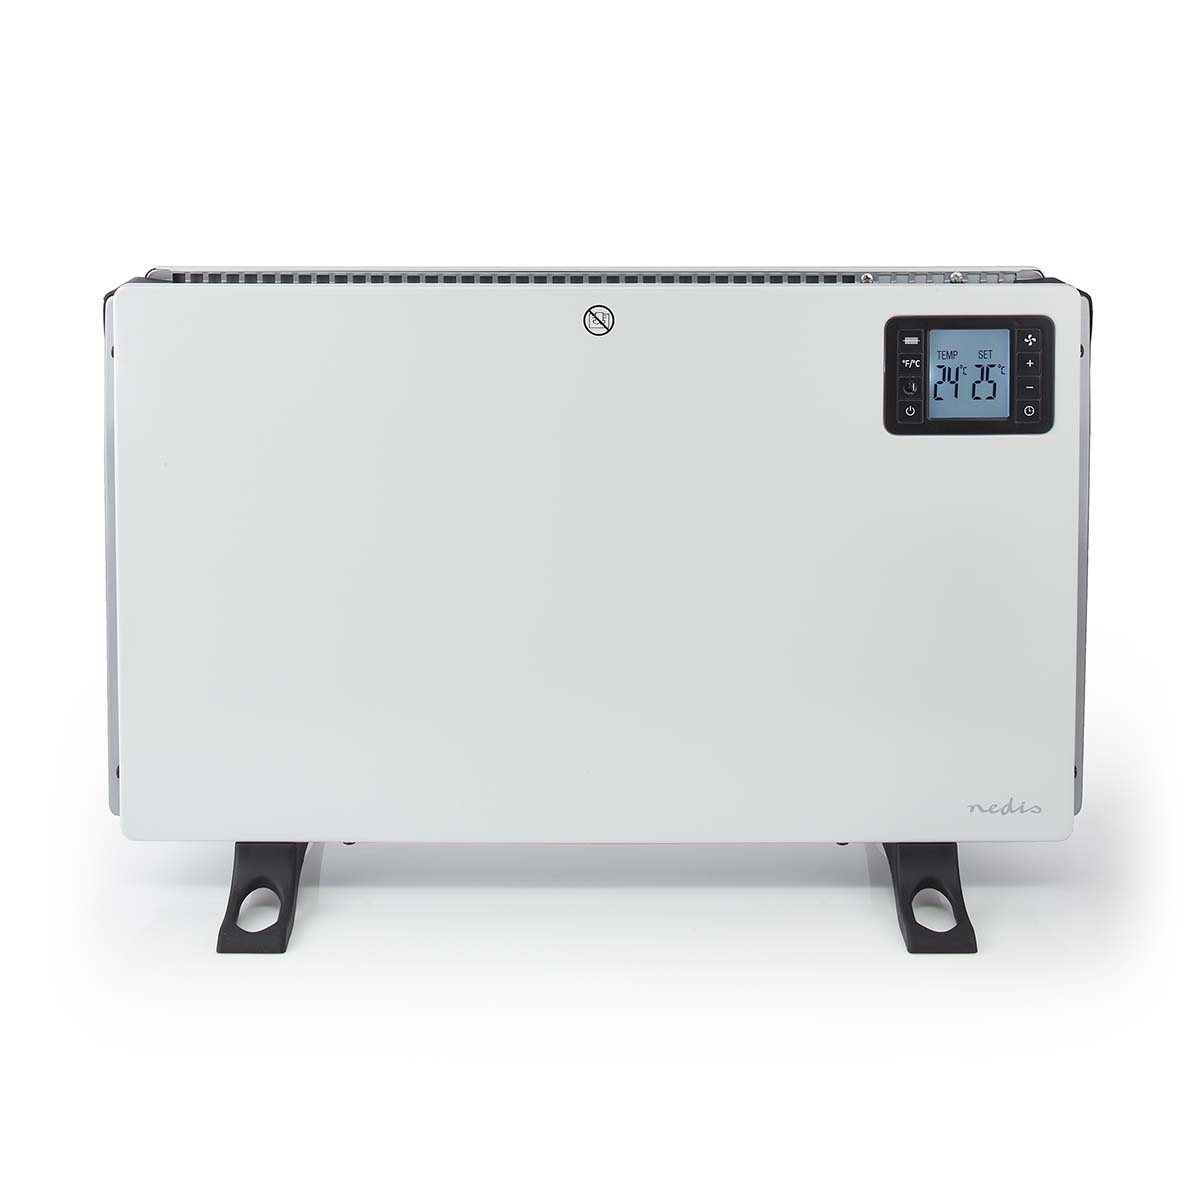 | 2000 W | 3 Varmeindstillinger | Turbofunktion | Justerbar termostat | Fjernbetjening | LCD